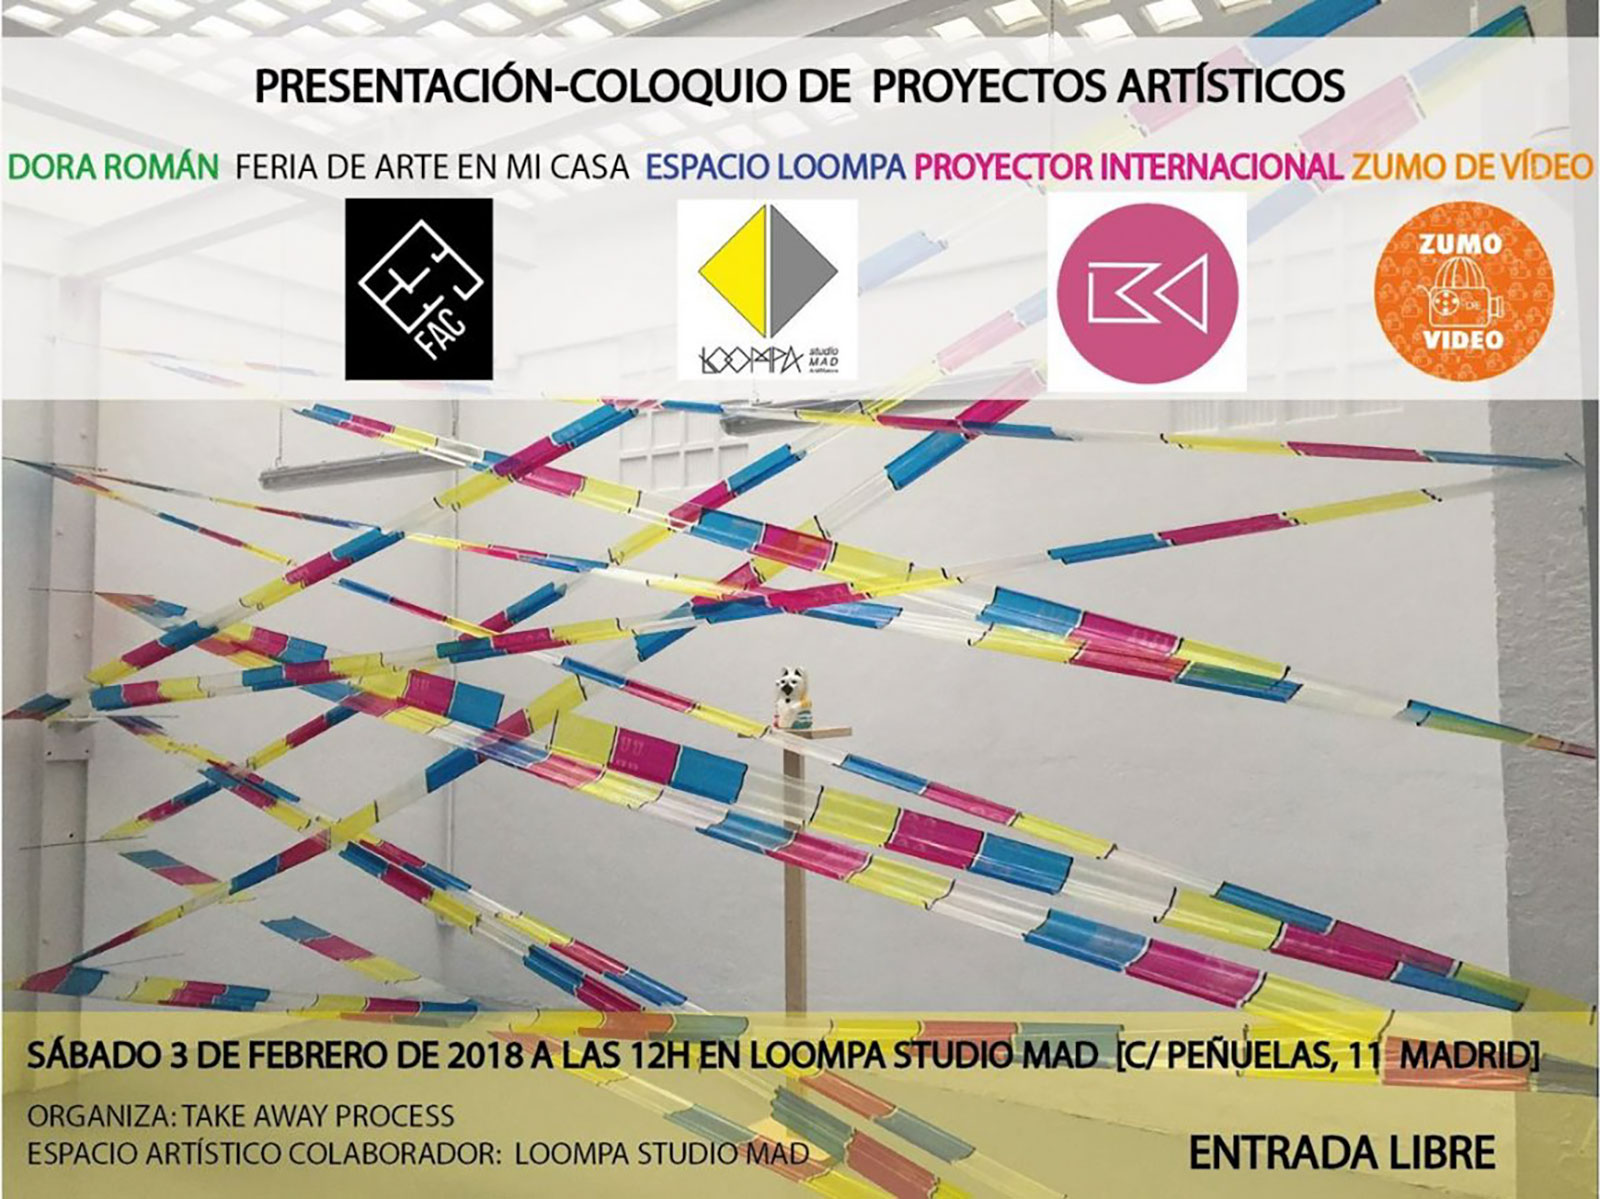 03.01.2018 Presentación-Coloquio De Proyectos Artísticos